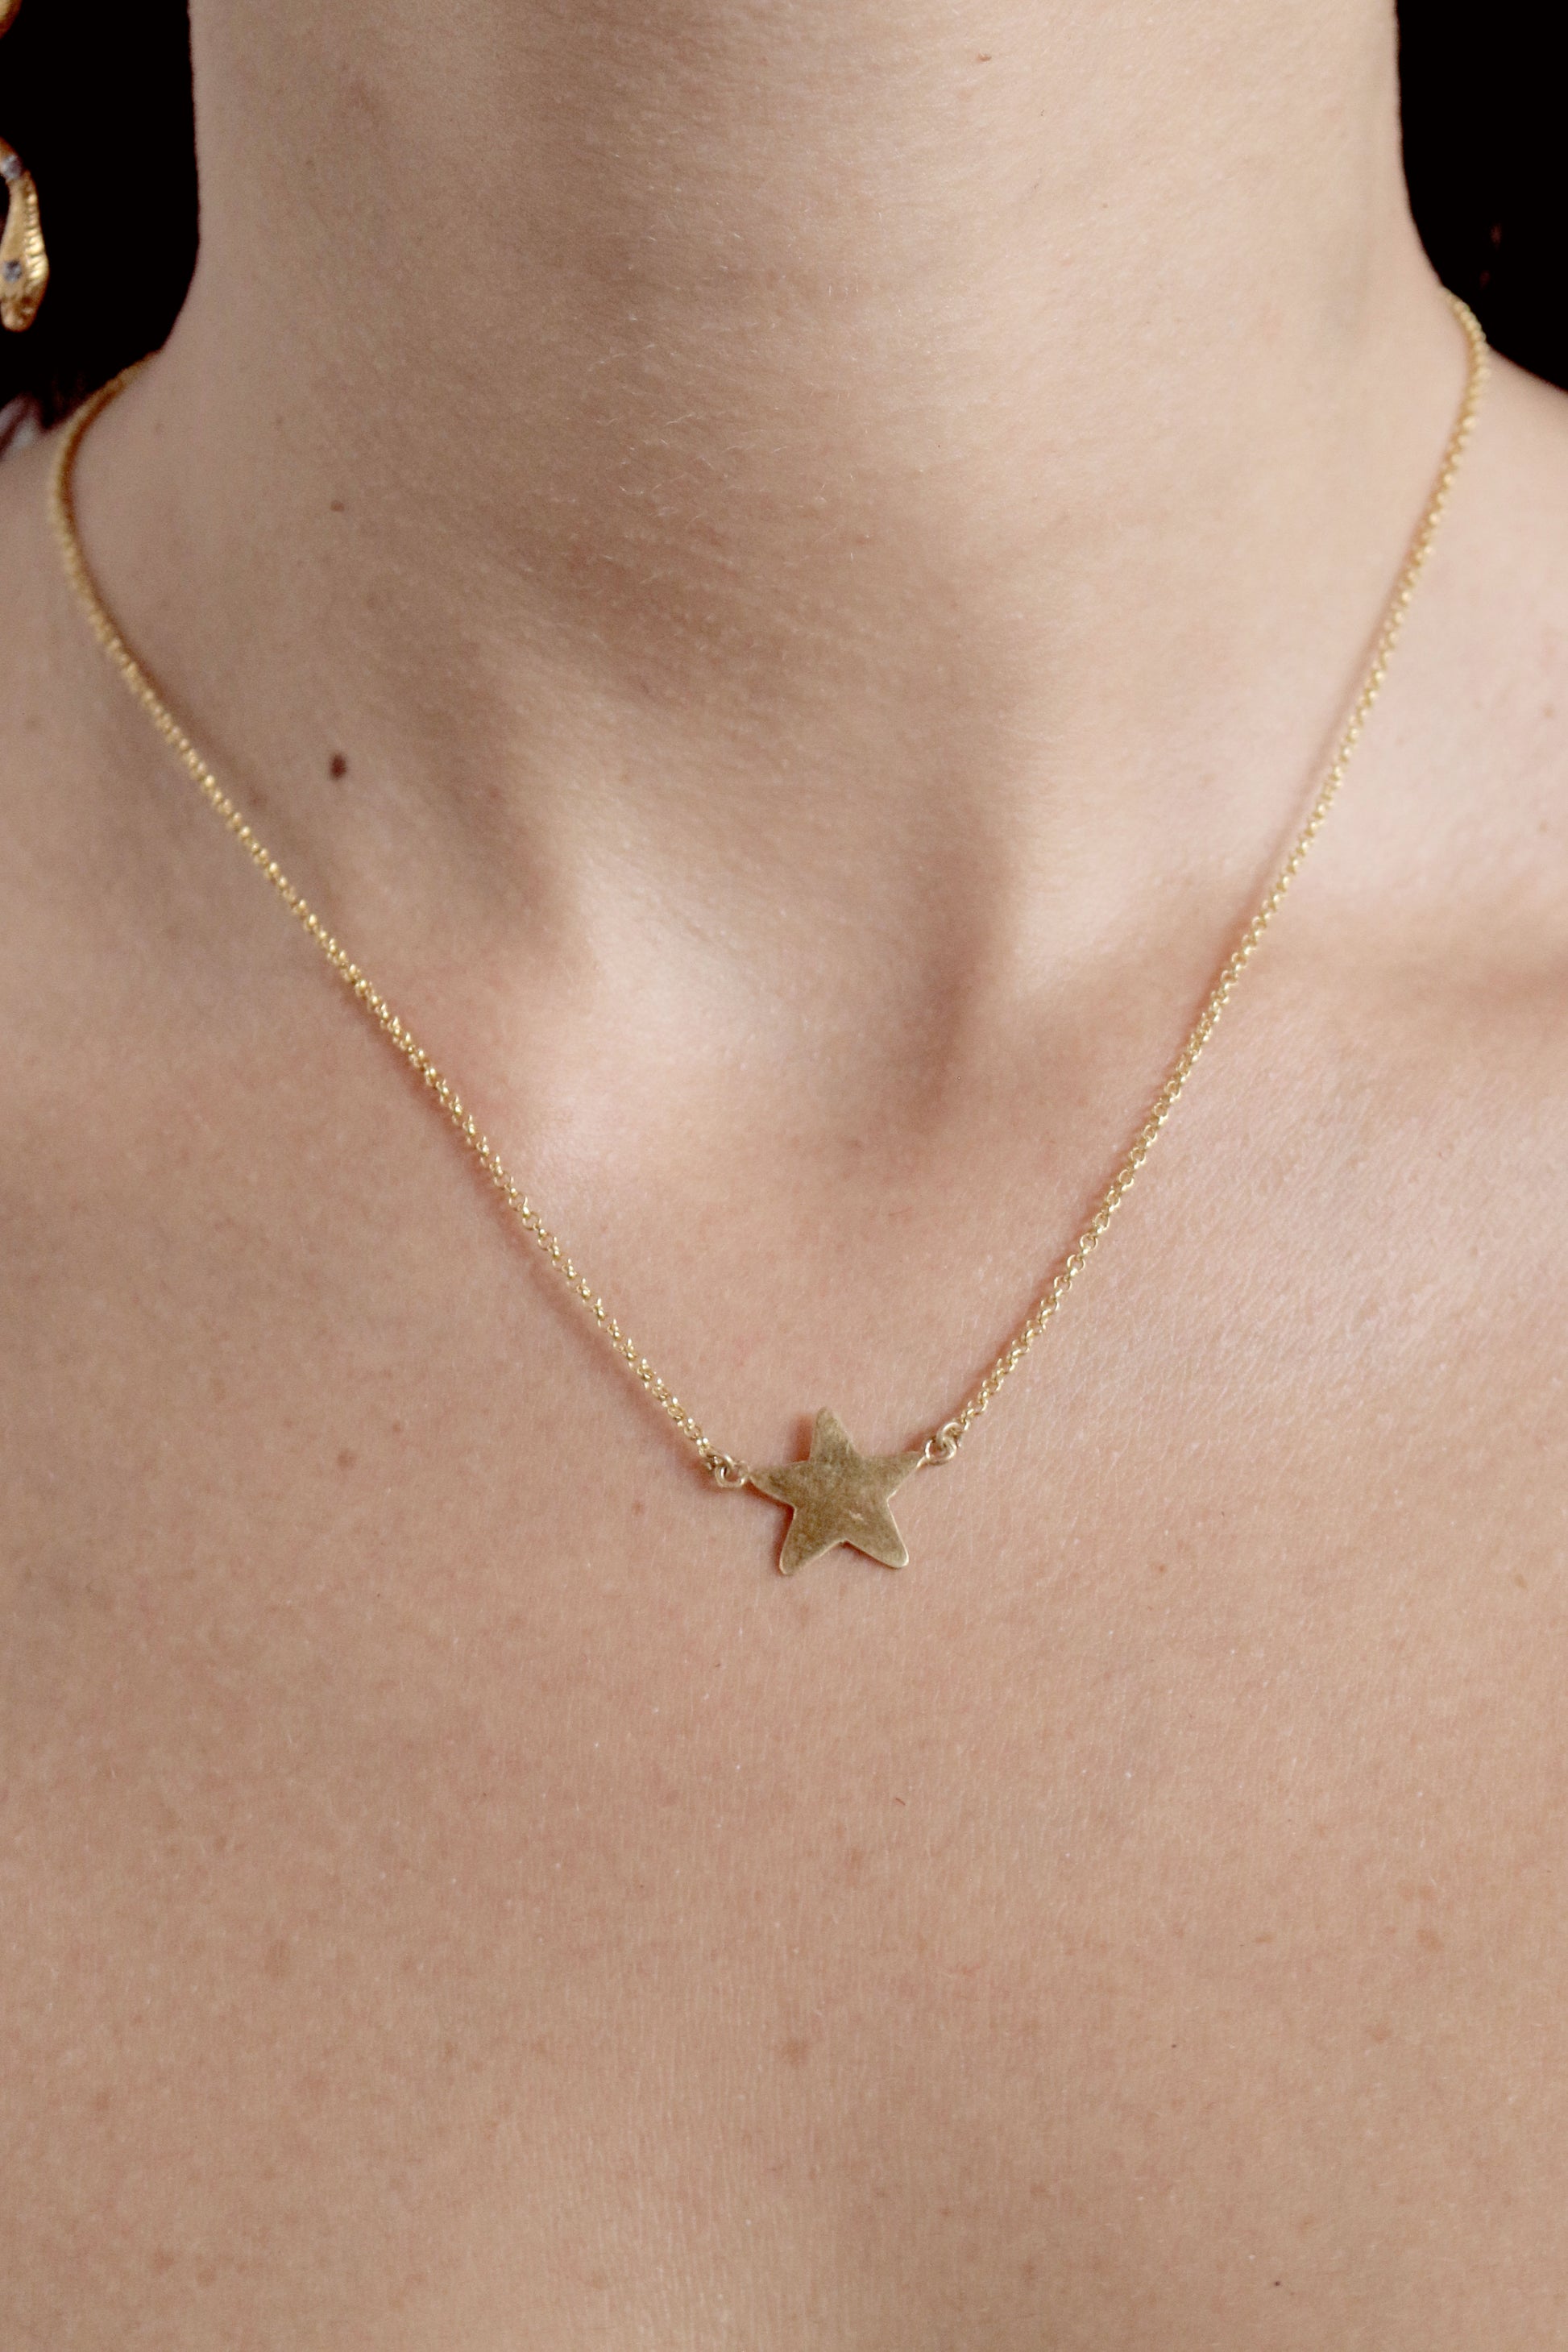  star necklace look